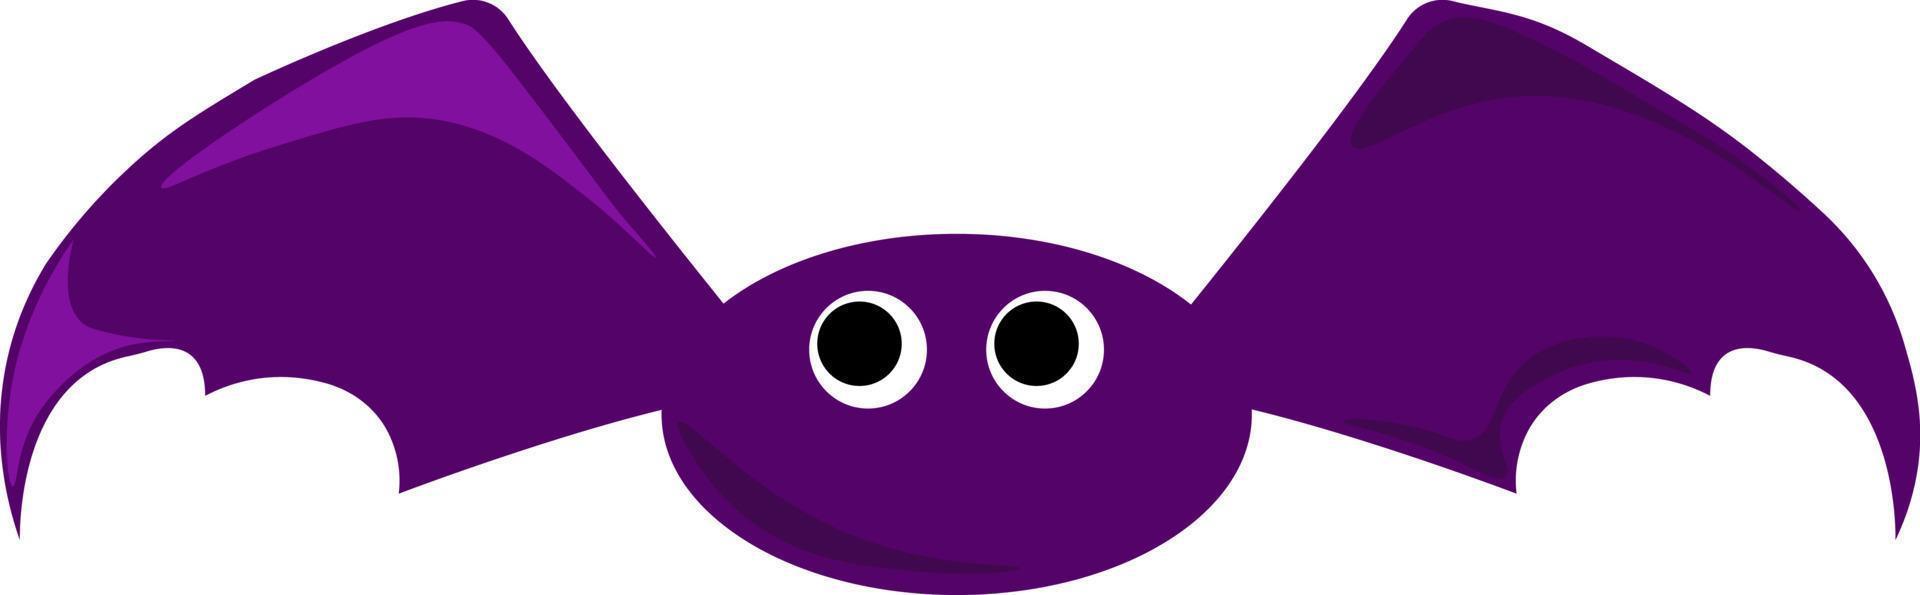 Purple bat, illustration, vector on white background.